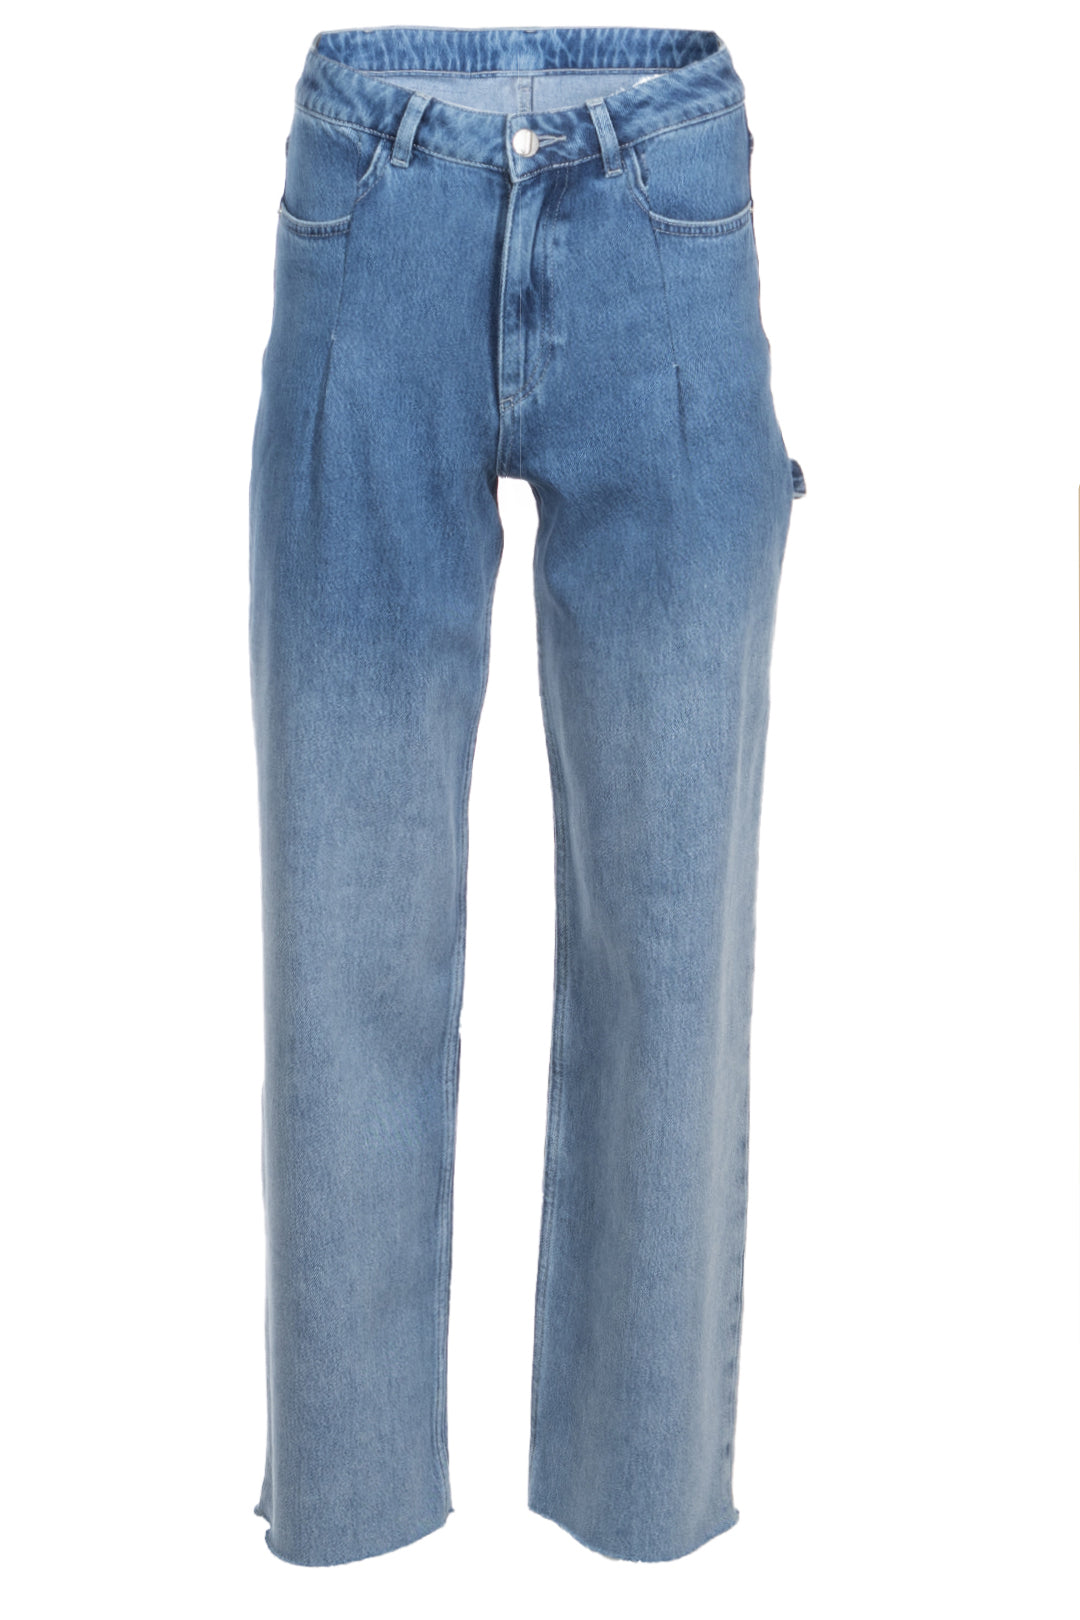 Two-tone blue low-wash jeans | Bleecker